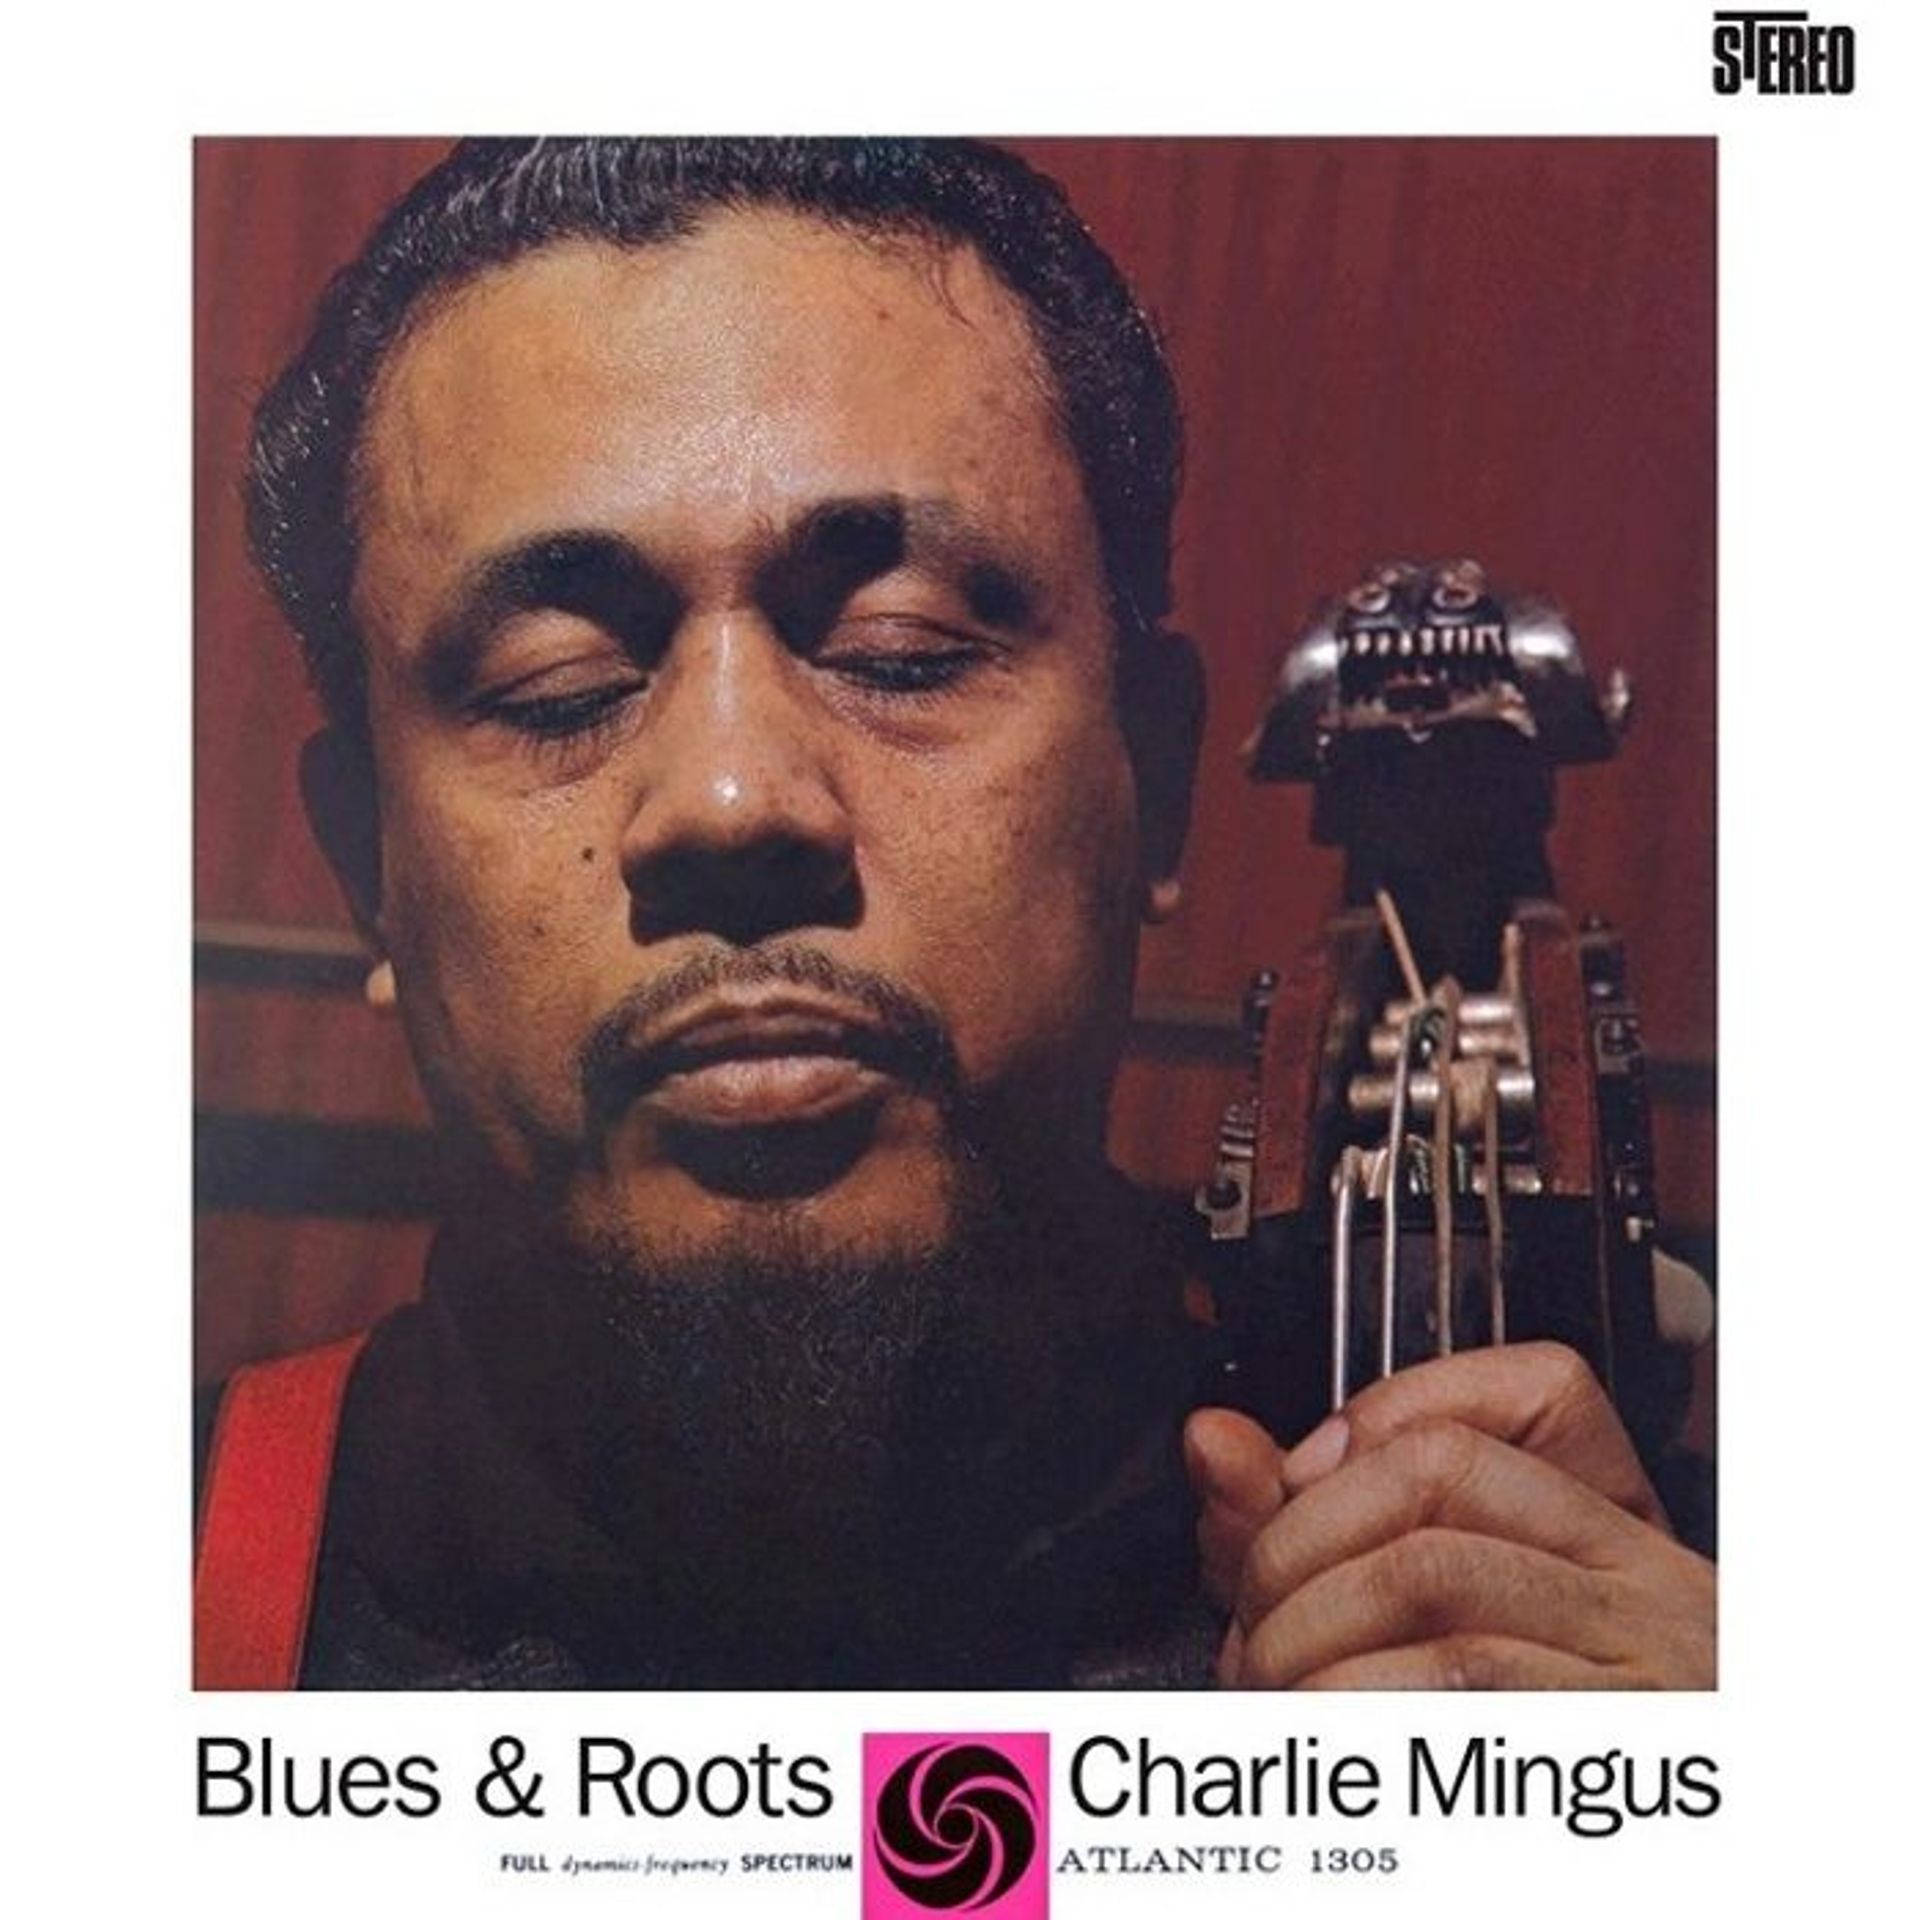 Charlie Mingus : "Blues & Roots" (1959)